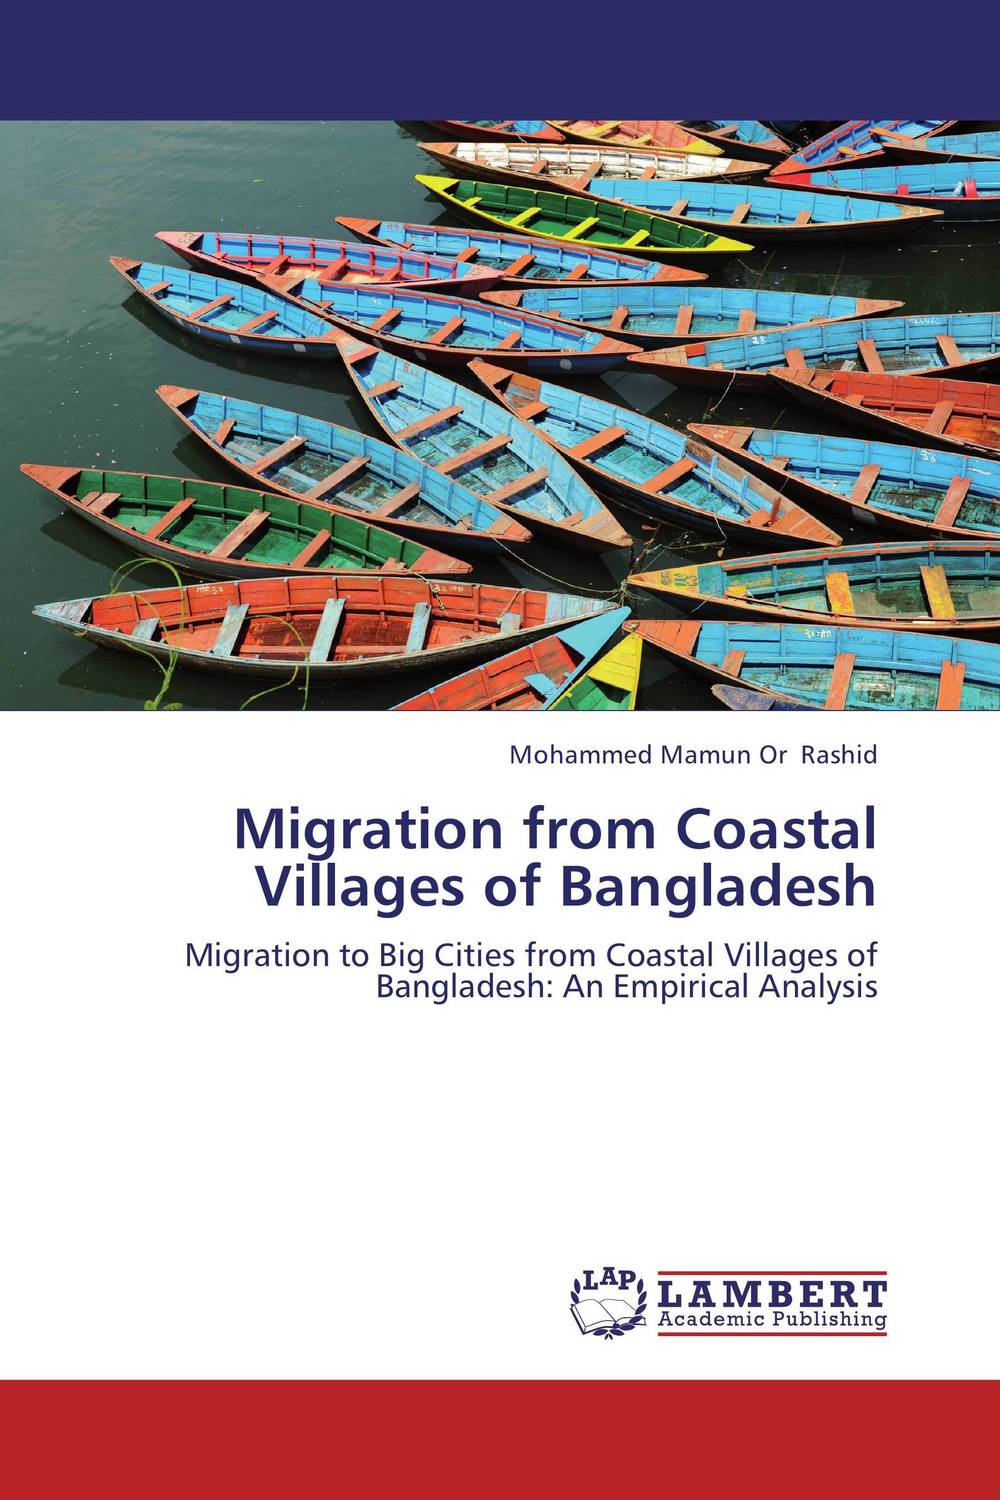 Migration from Coastal Villages of Bangladesh